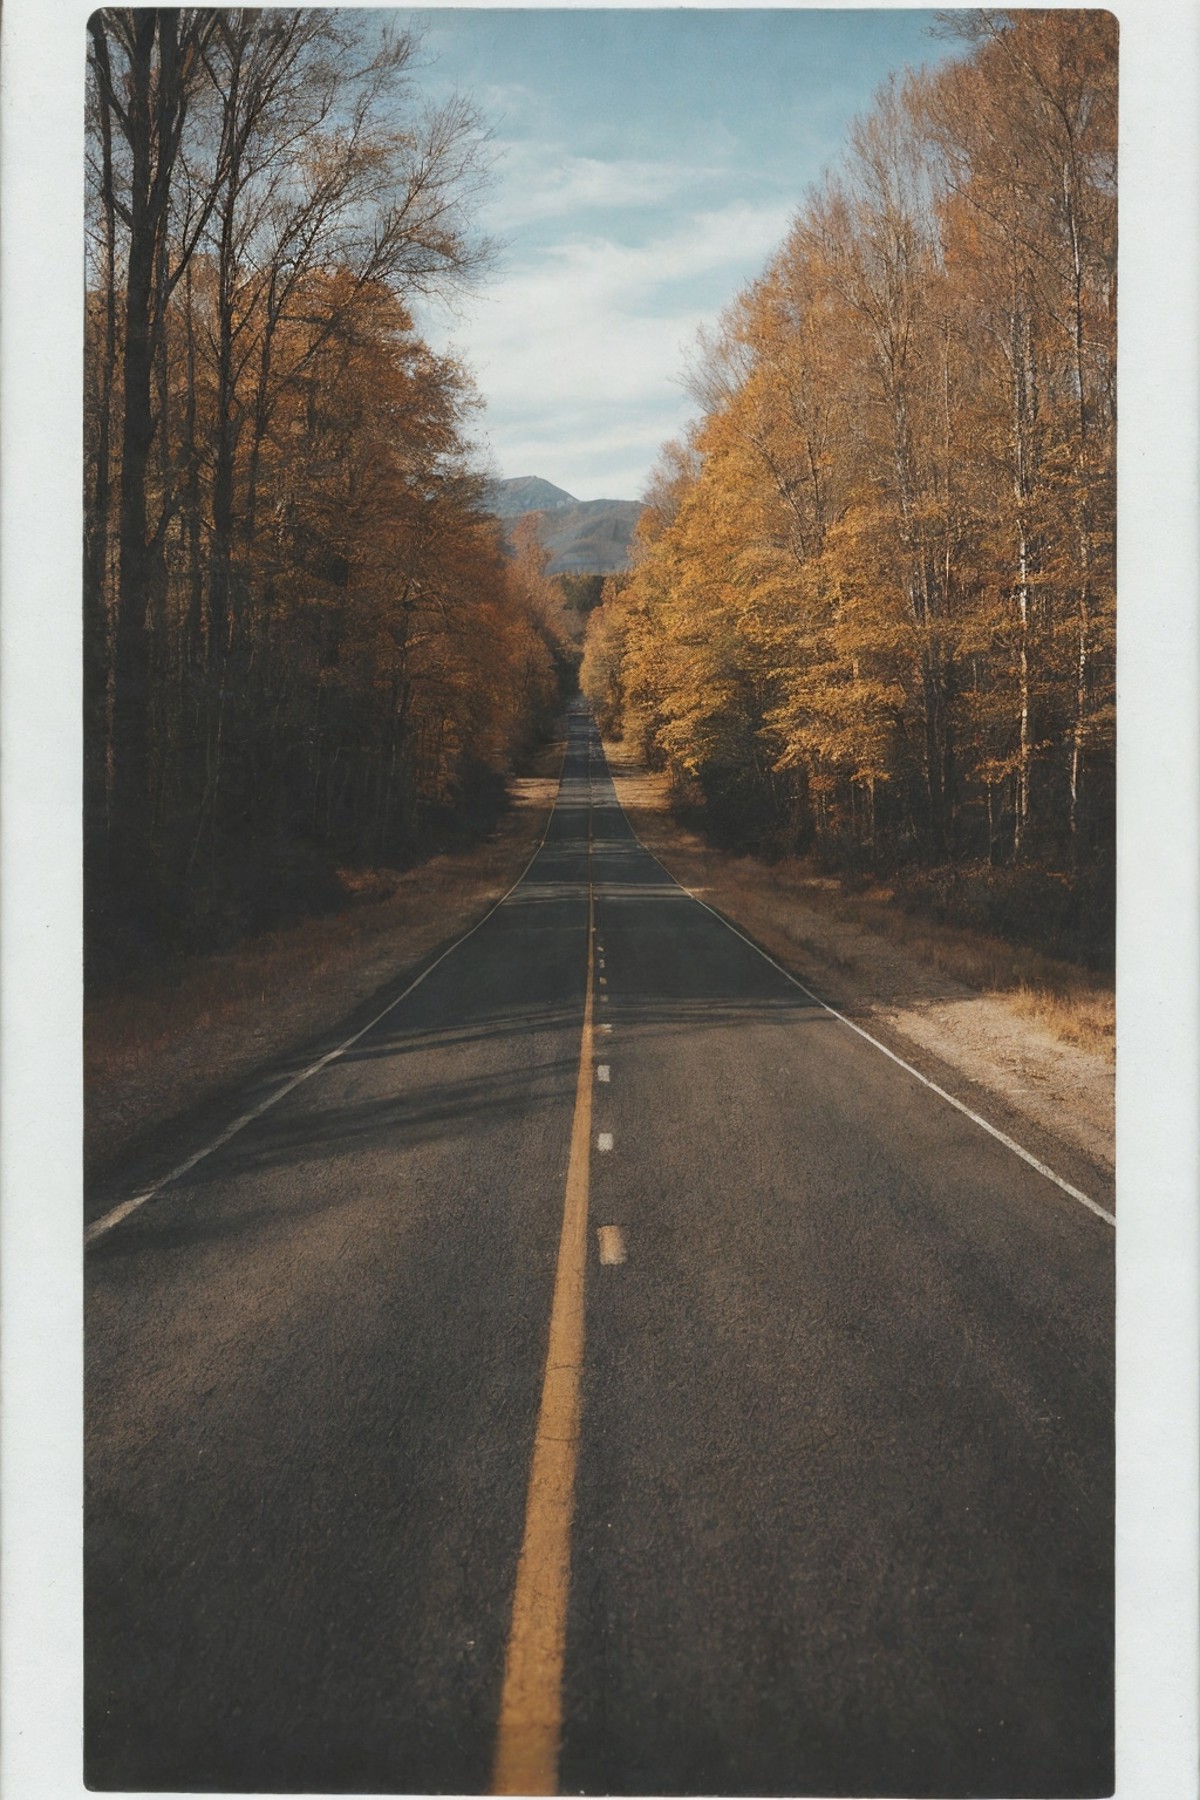 polaroid photo of a road, warm tones, perfect landscape